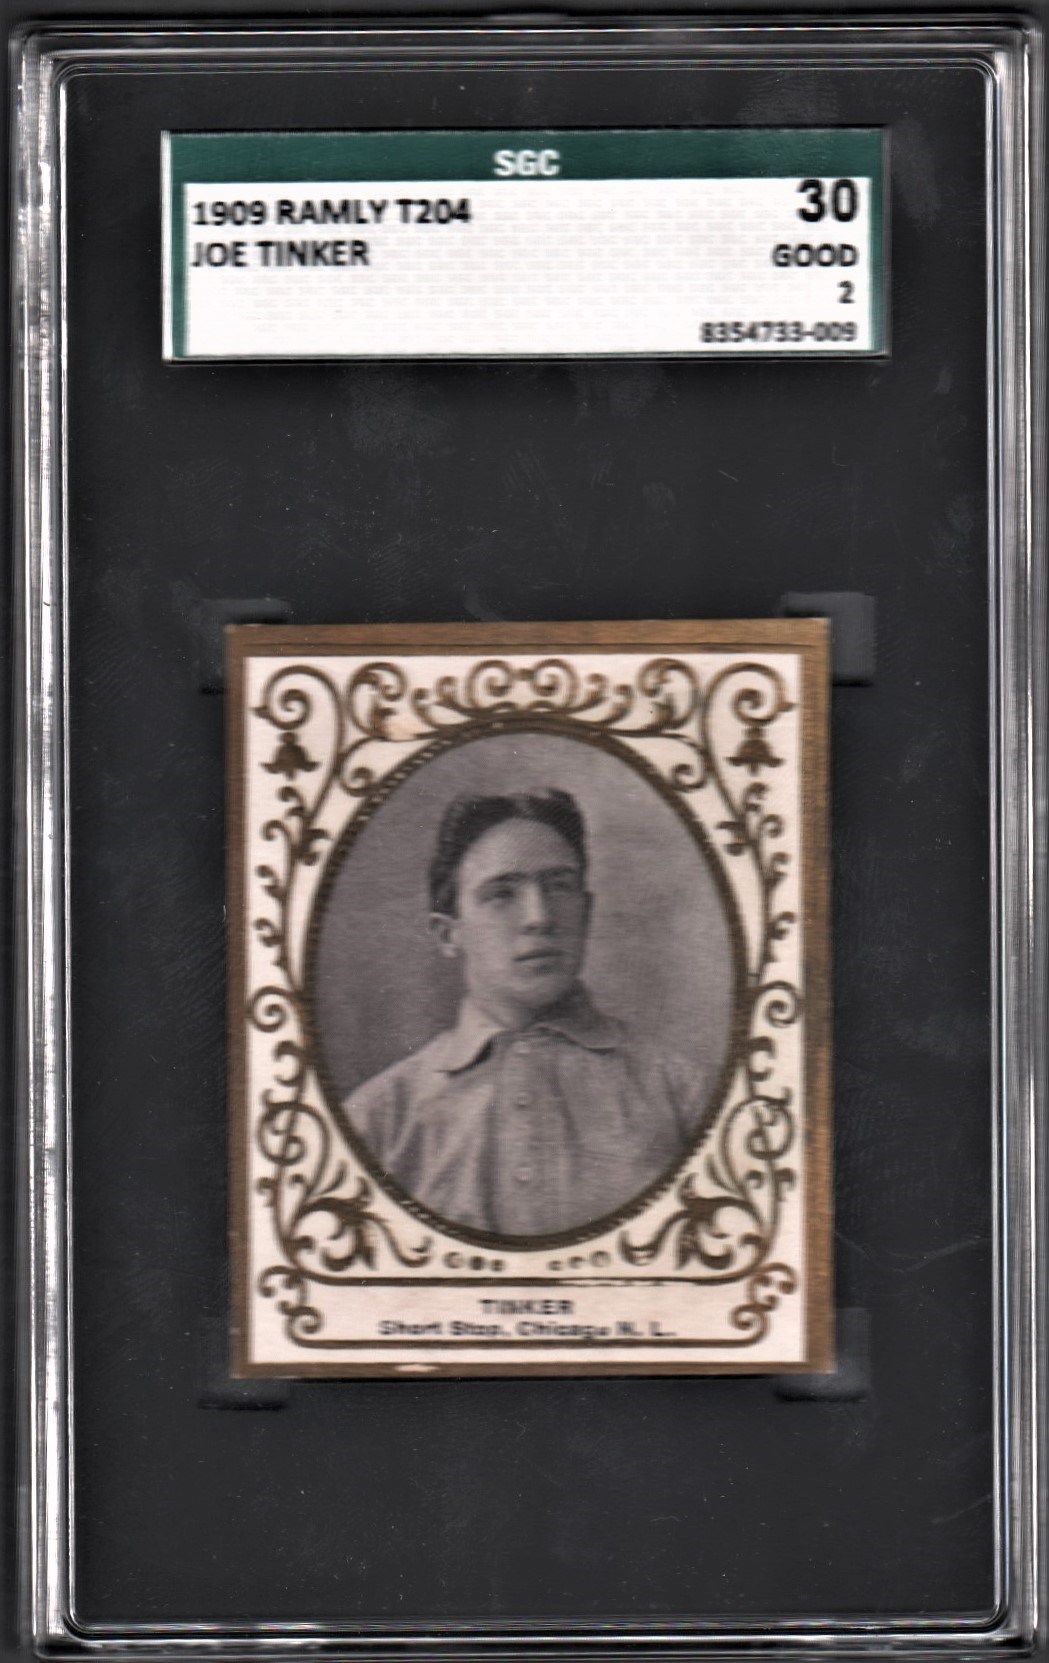 Baseball and Trading Cards - 1909 Ramly T204 Joe Tinker HOF SGC 30